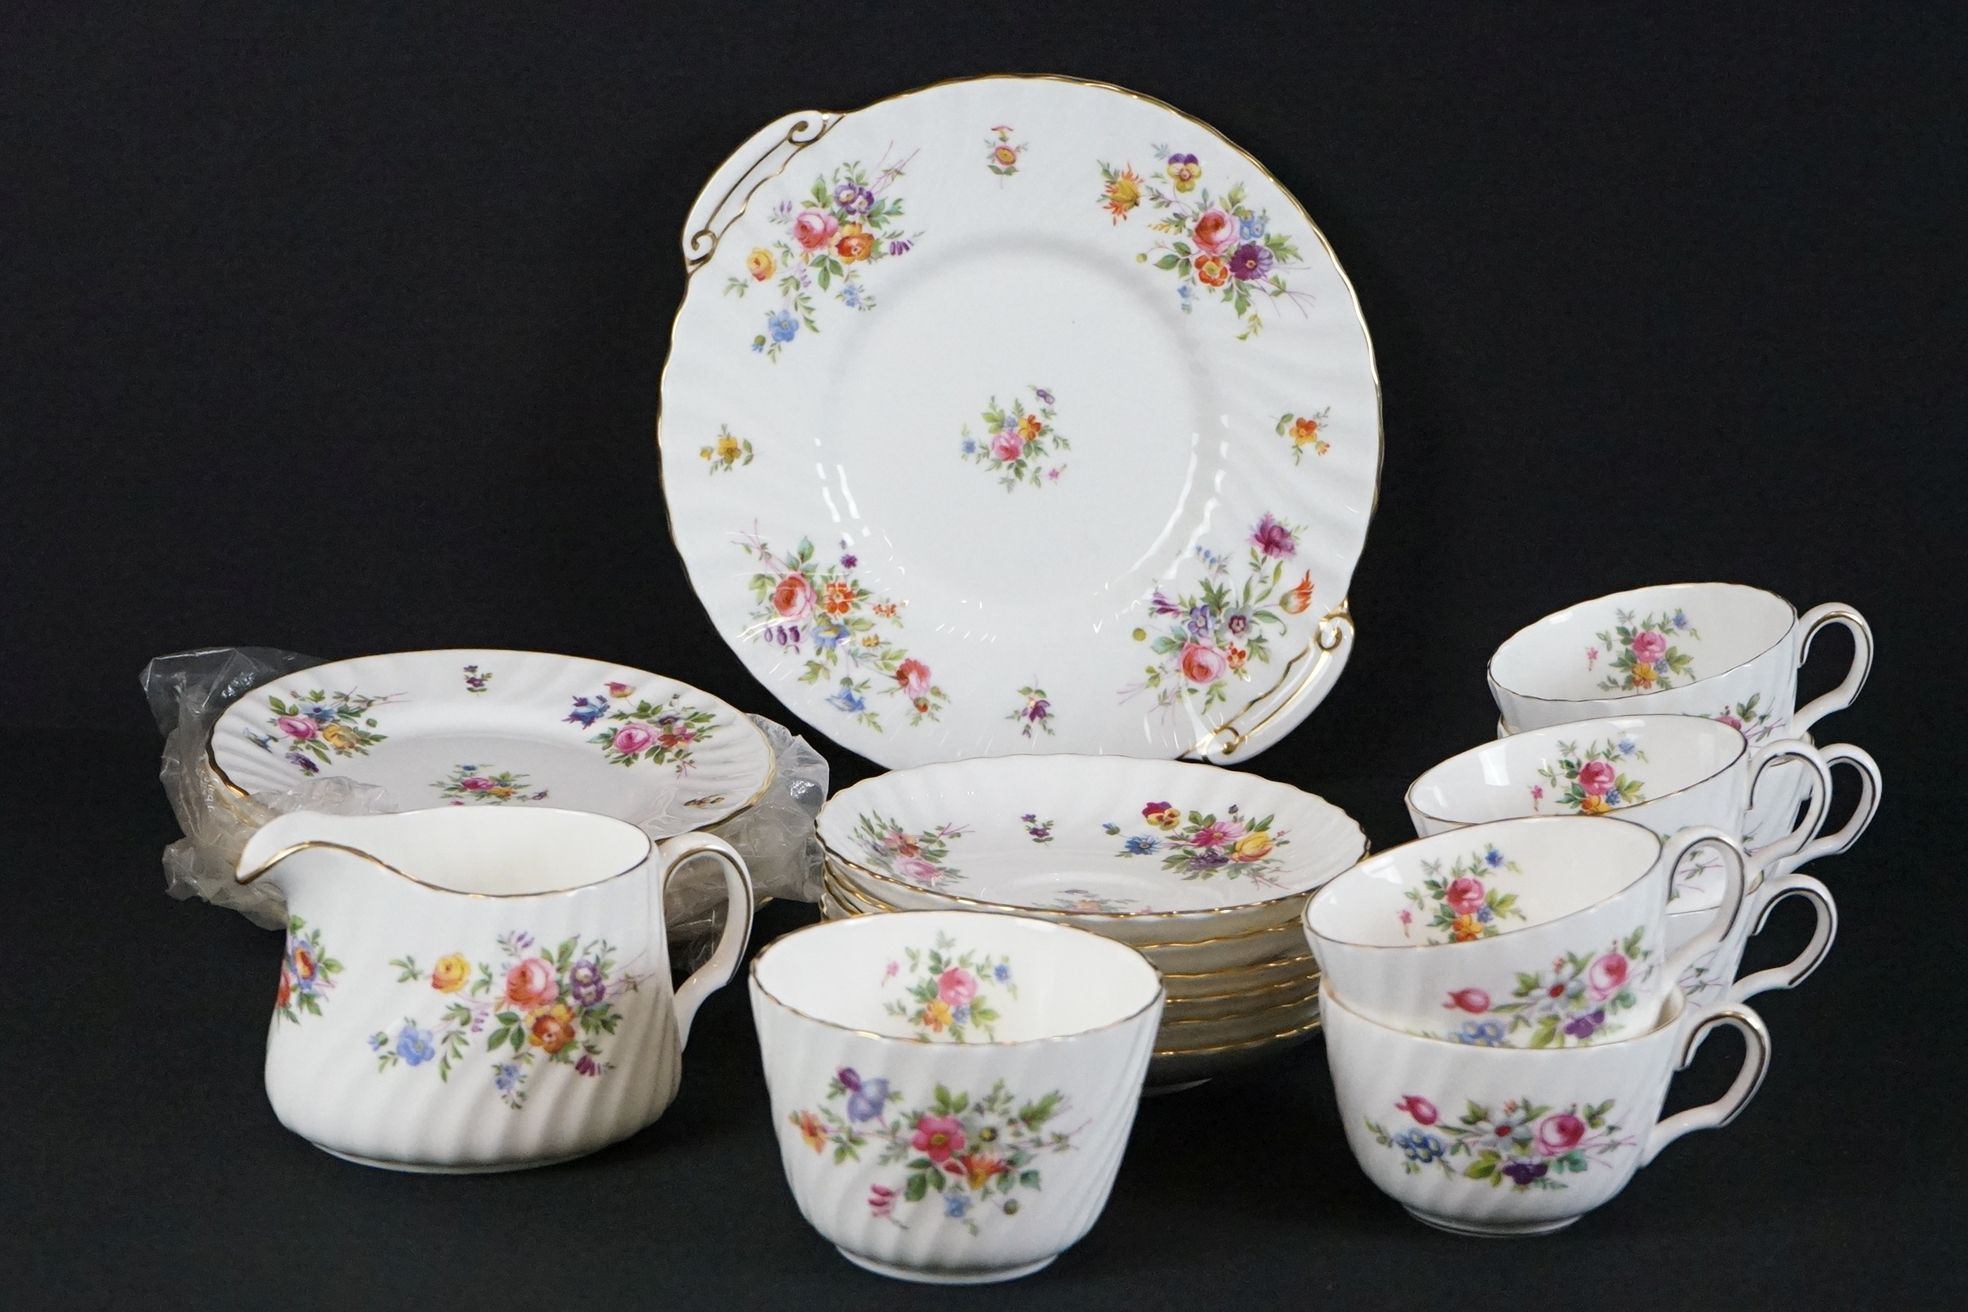 Minton ' Marlow ' pattern no. S.309 tea set for 6 to include 6 teacups & saucers, 6 tea plates, milk